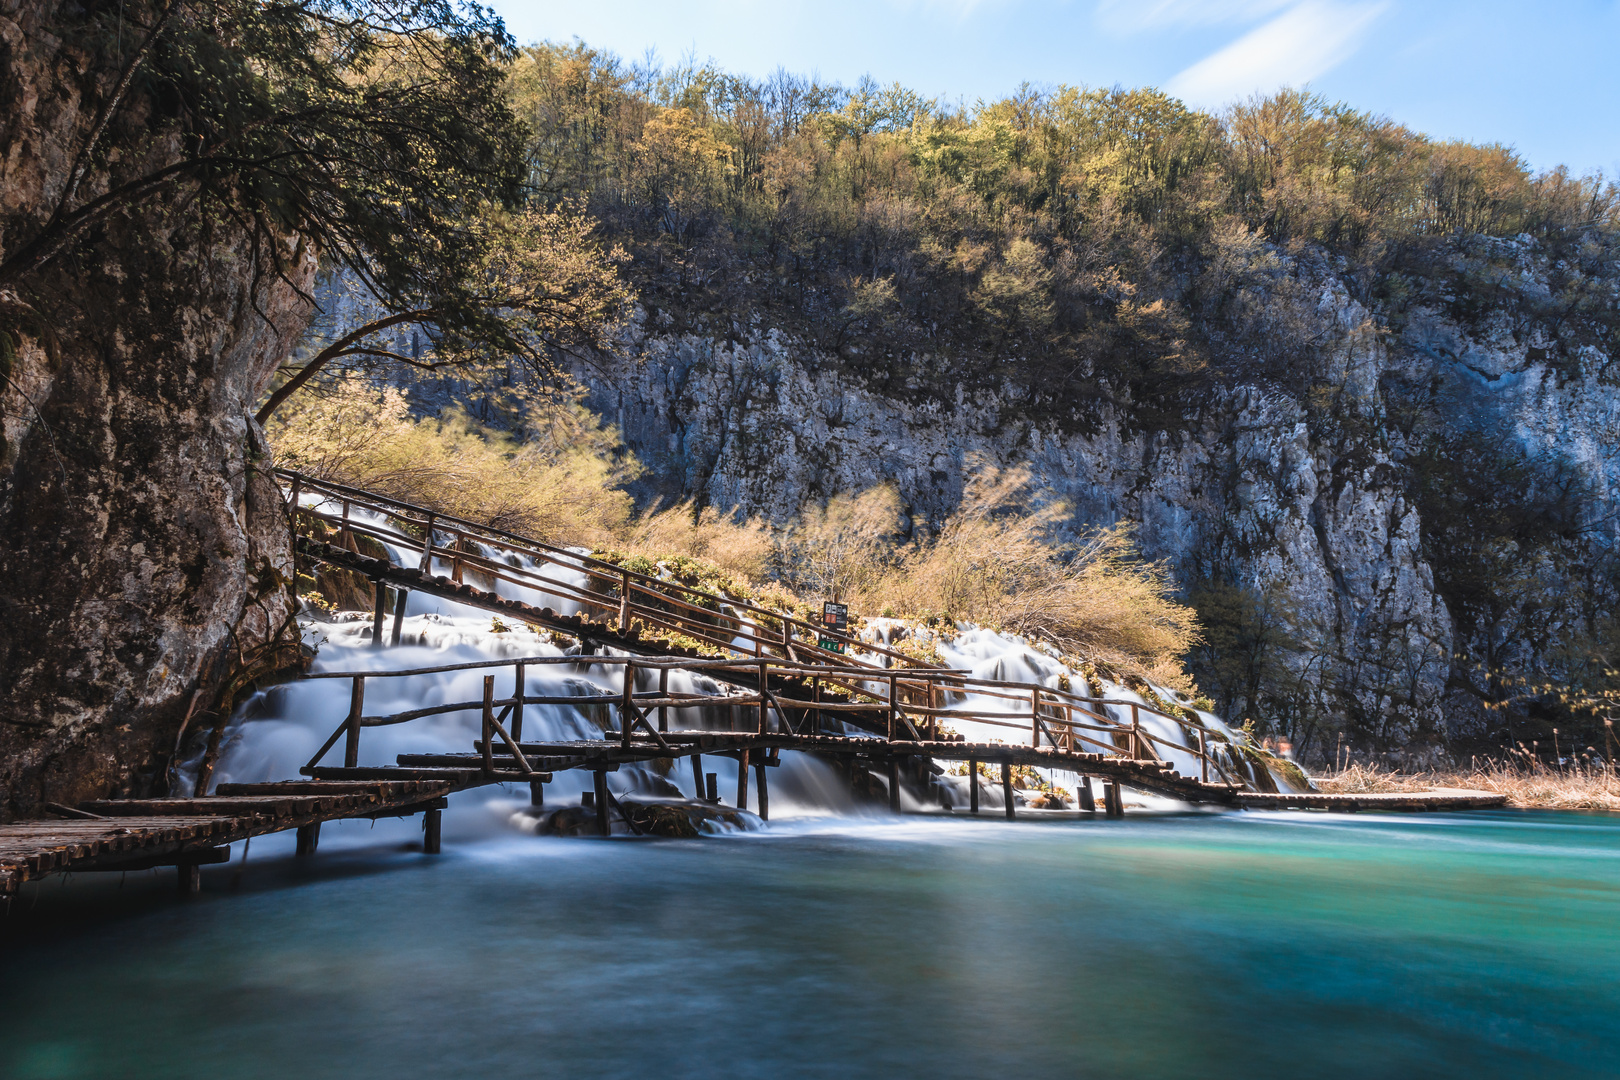 Nationalpark Plitvicer Seen, Kroatien